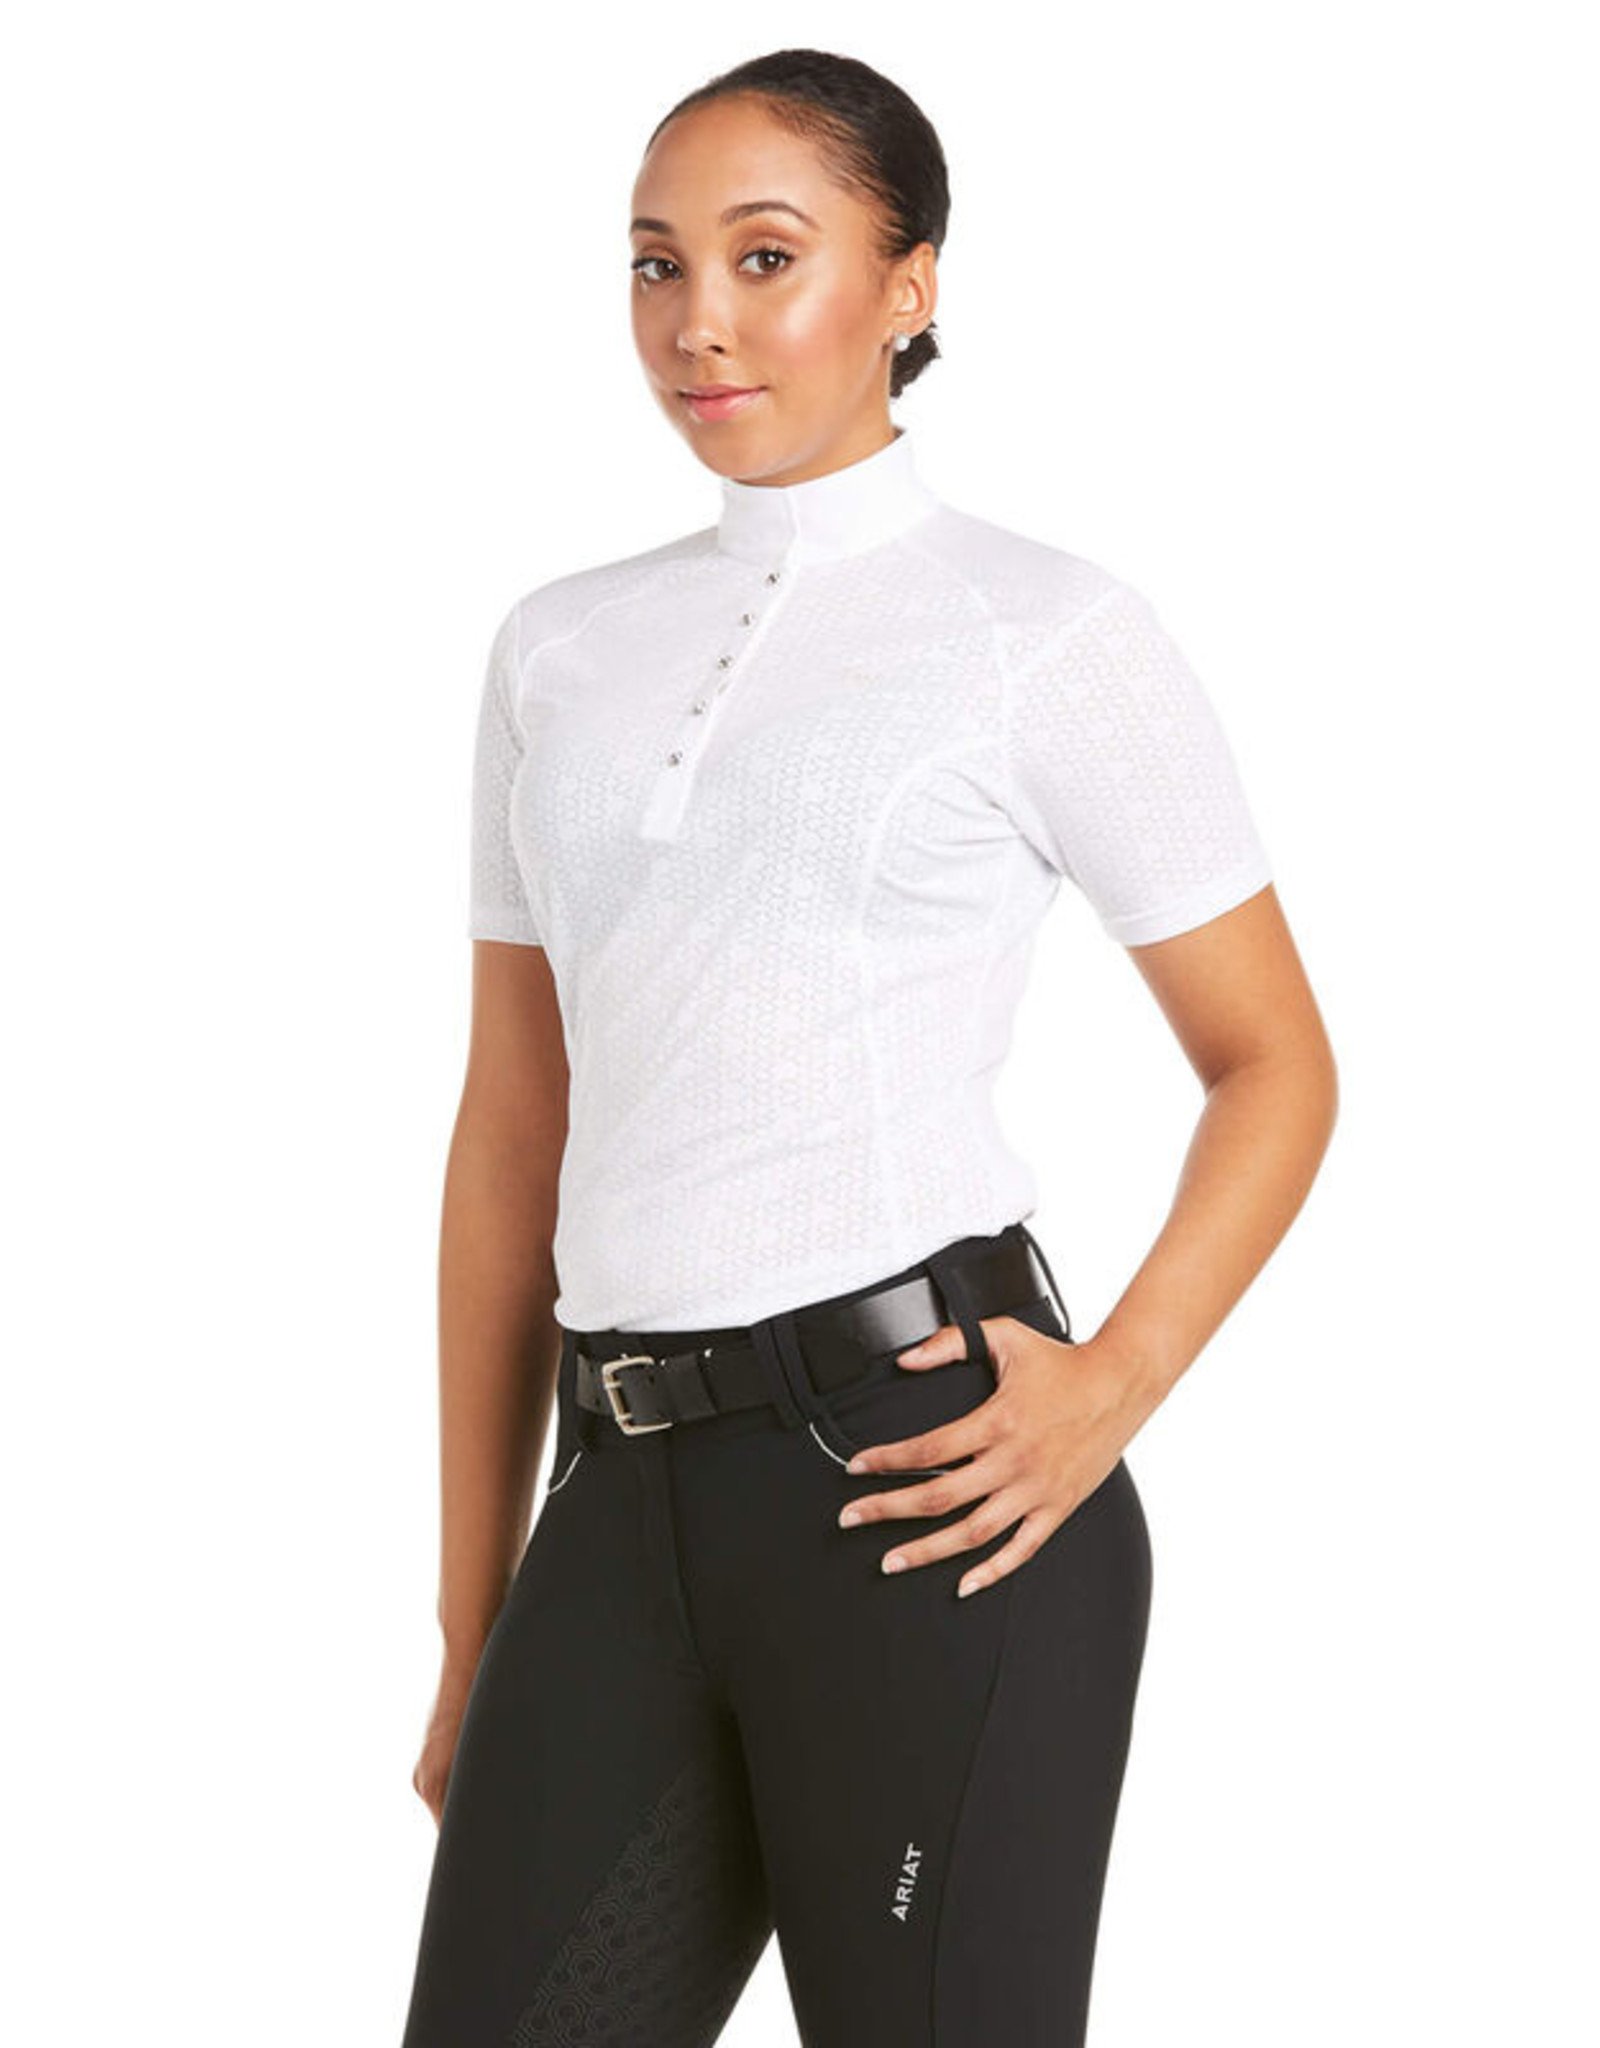 Calabasas Saddlery - Ariat Ladies' Ascent Crew Short Sleeve Shirt